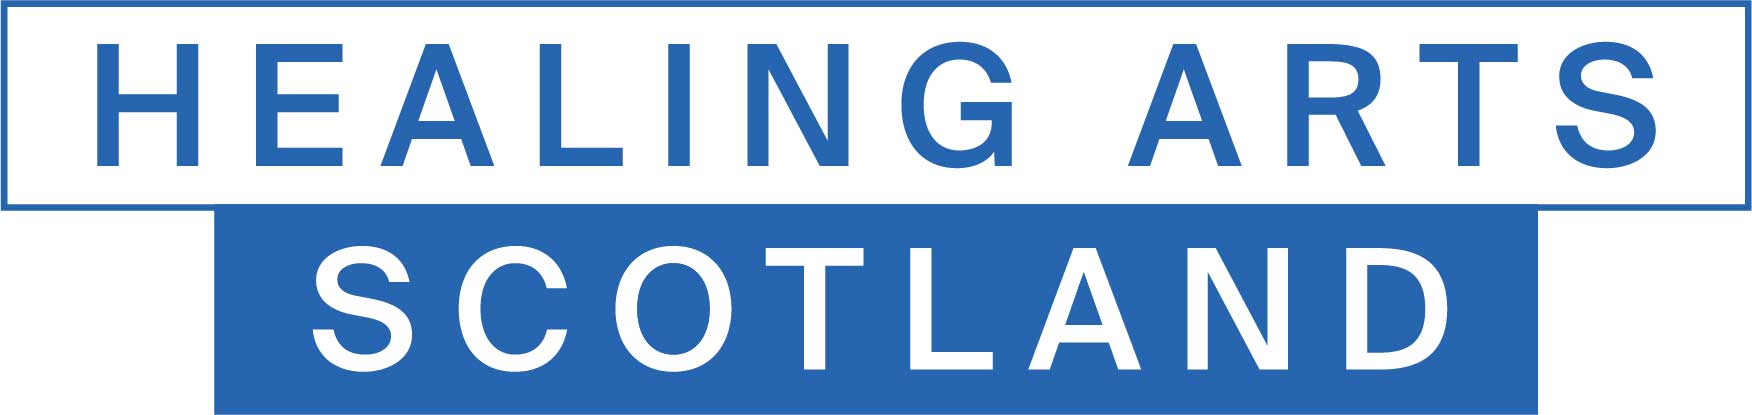 Healing Arts Scotland logo in blue